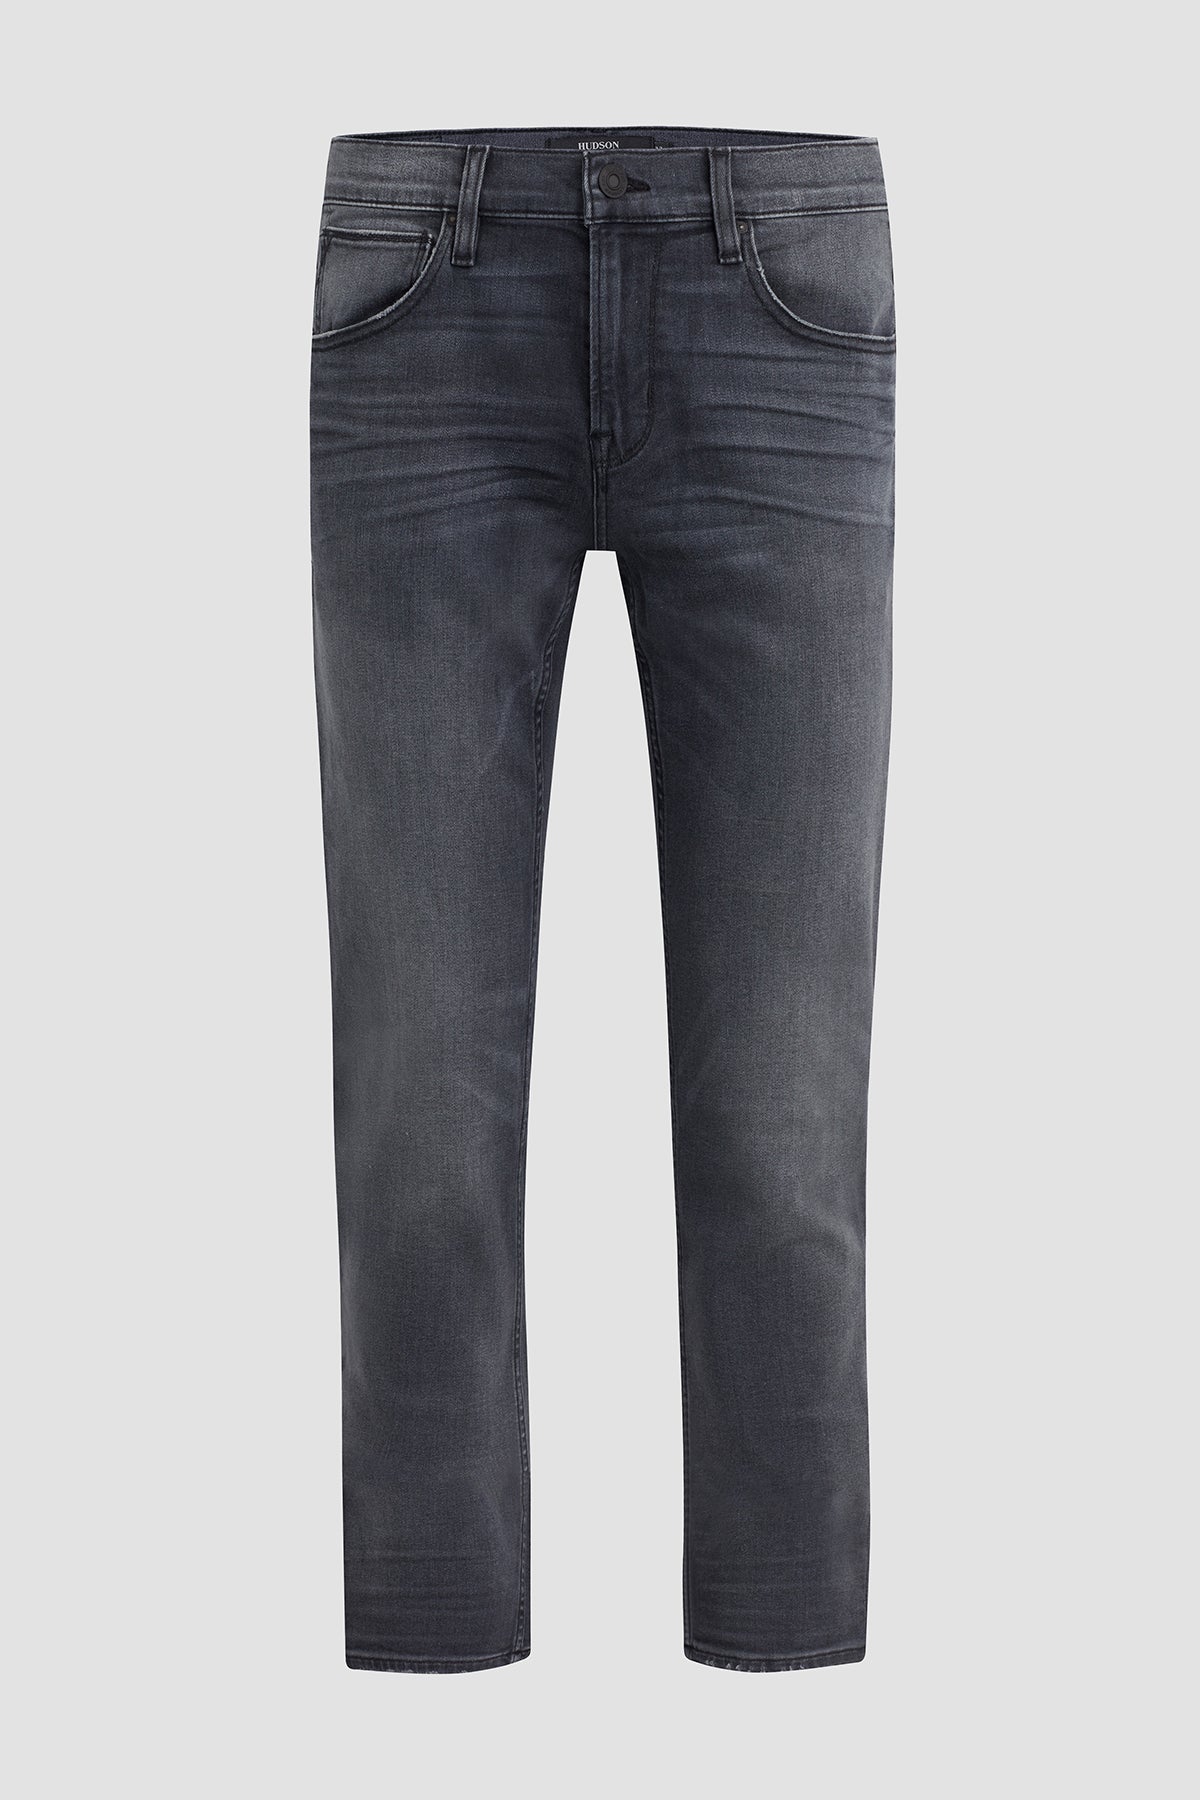 Blake Straight Jean Premium Italian Hudson Jeans